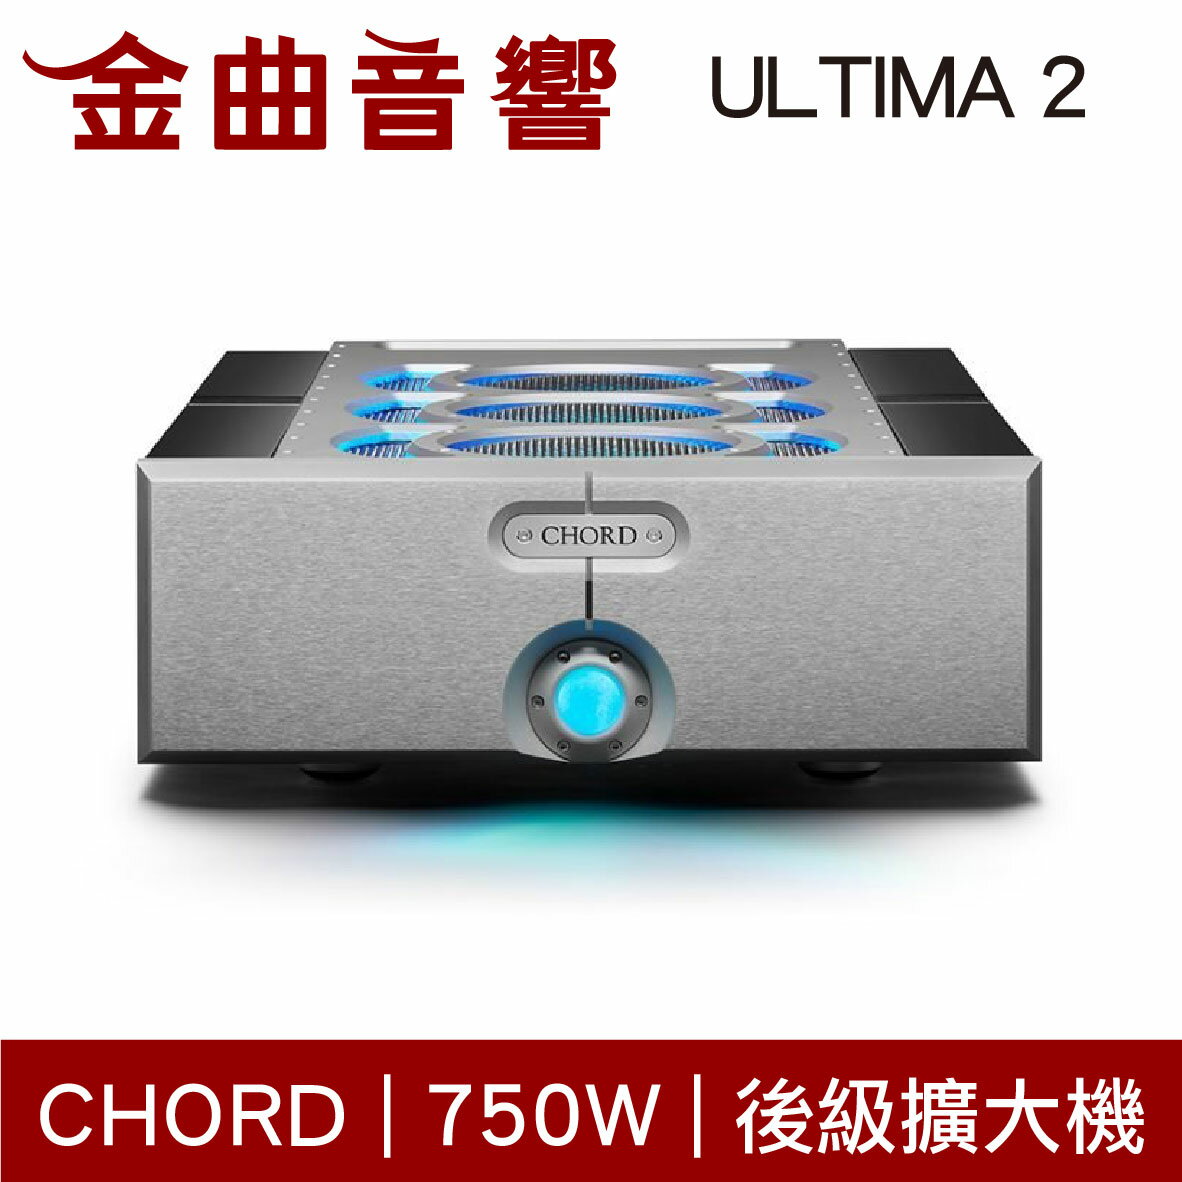 Chord ULTIMA 2 銀色 750W 單聲道 Mono 後級擴大機 | 金曲音響